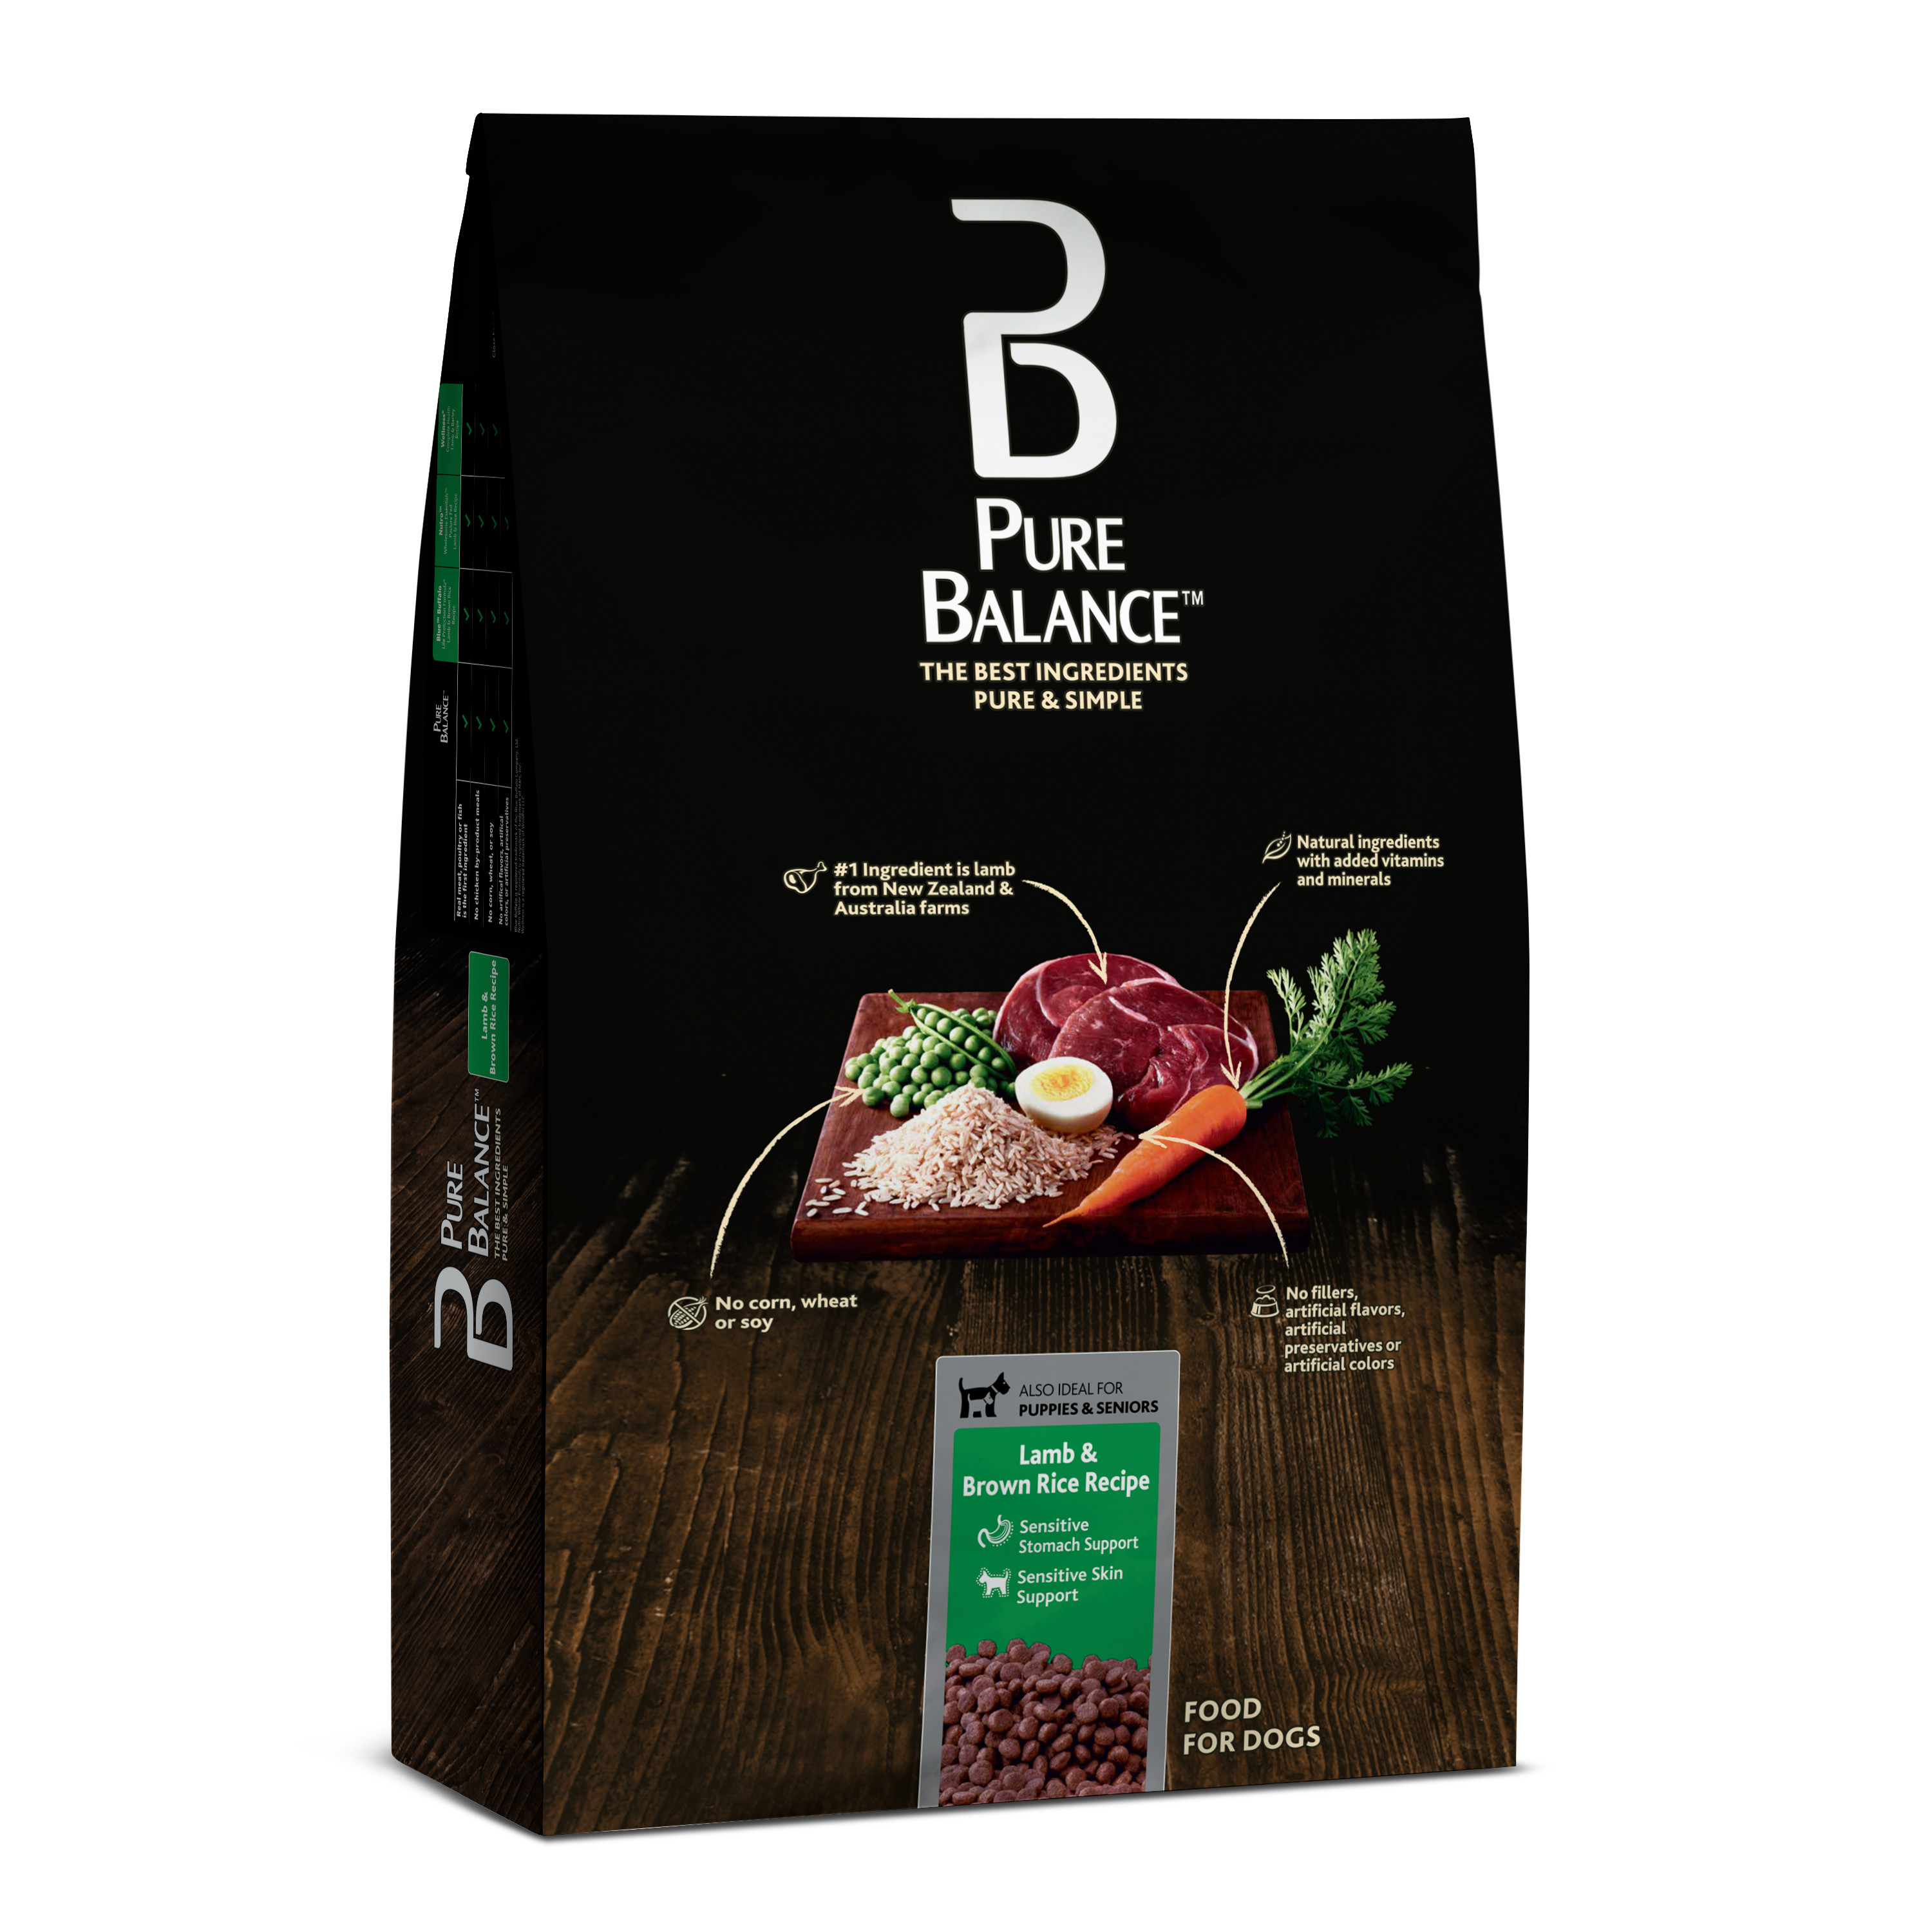 Pure Balance Lamb & Brown Rice Recipe Dry Dog Food, 30 lb - image 1 of 6